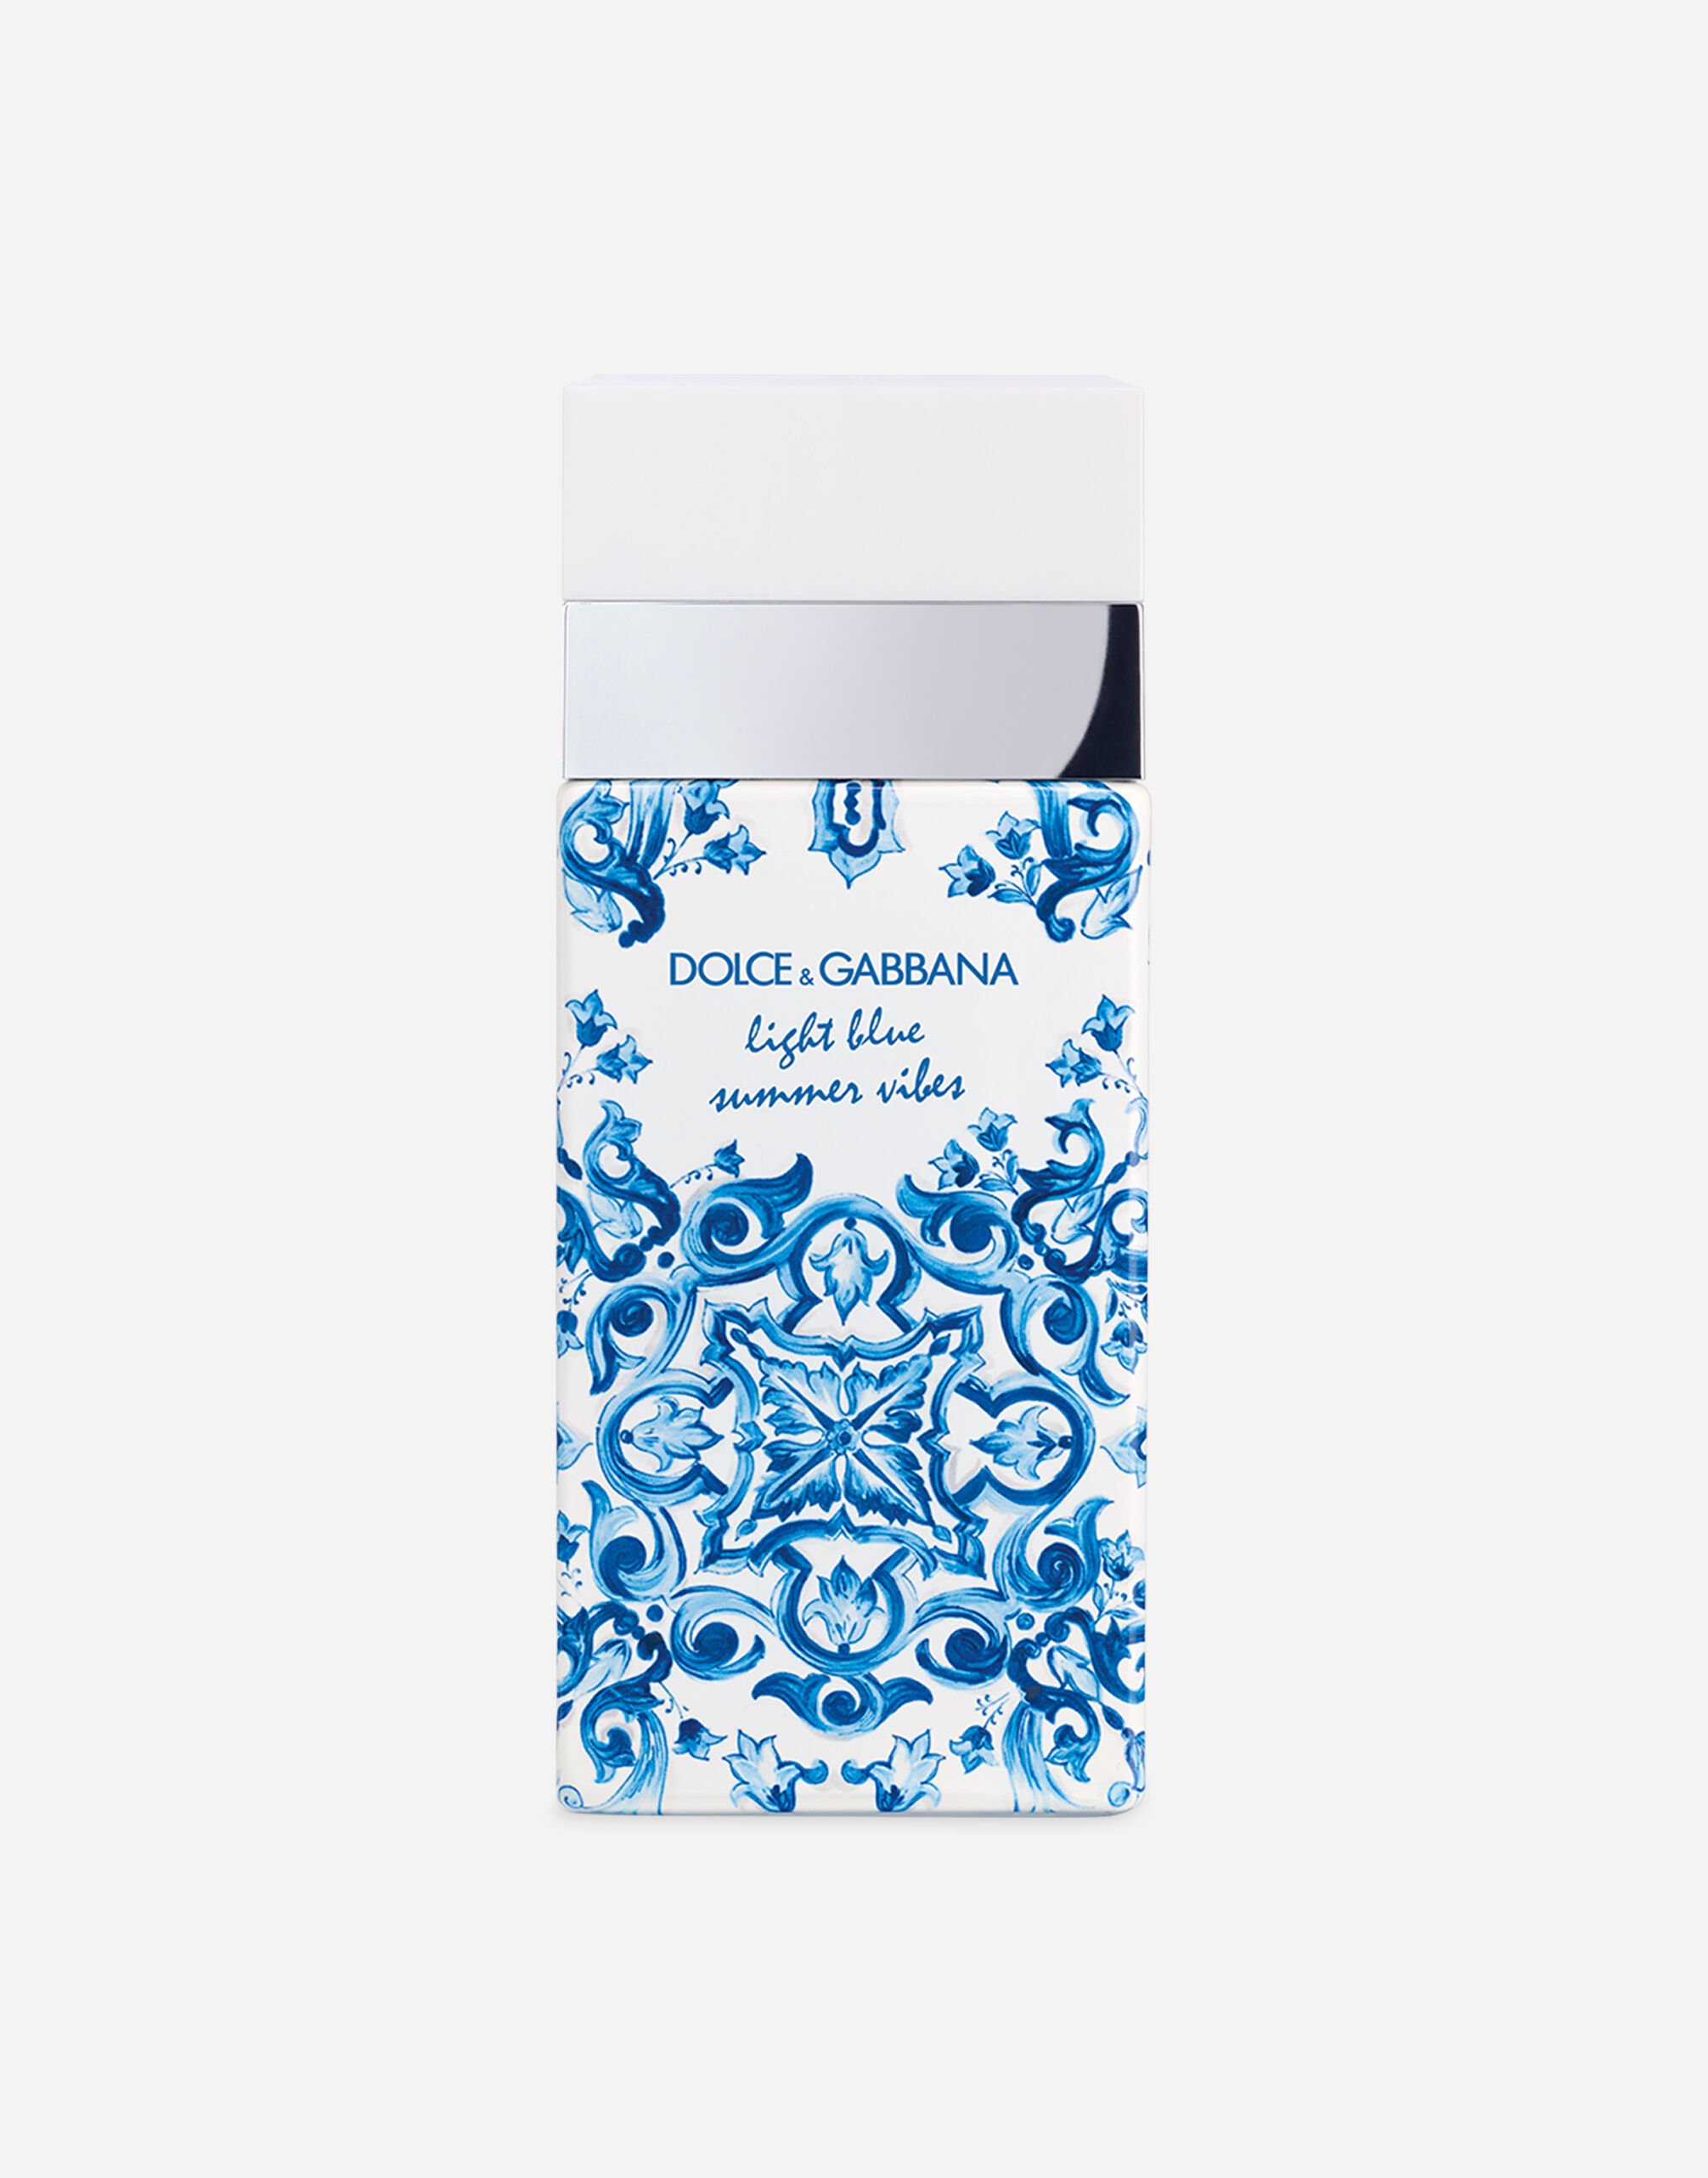 Dolce & Gabbana Light Blue Summer Vibes Eau de Toilette Stampa F6JITTFSFNQ